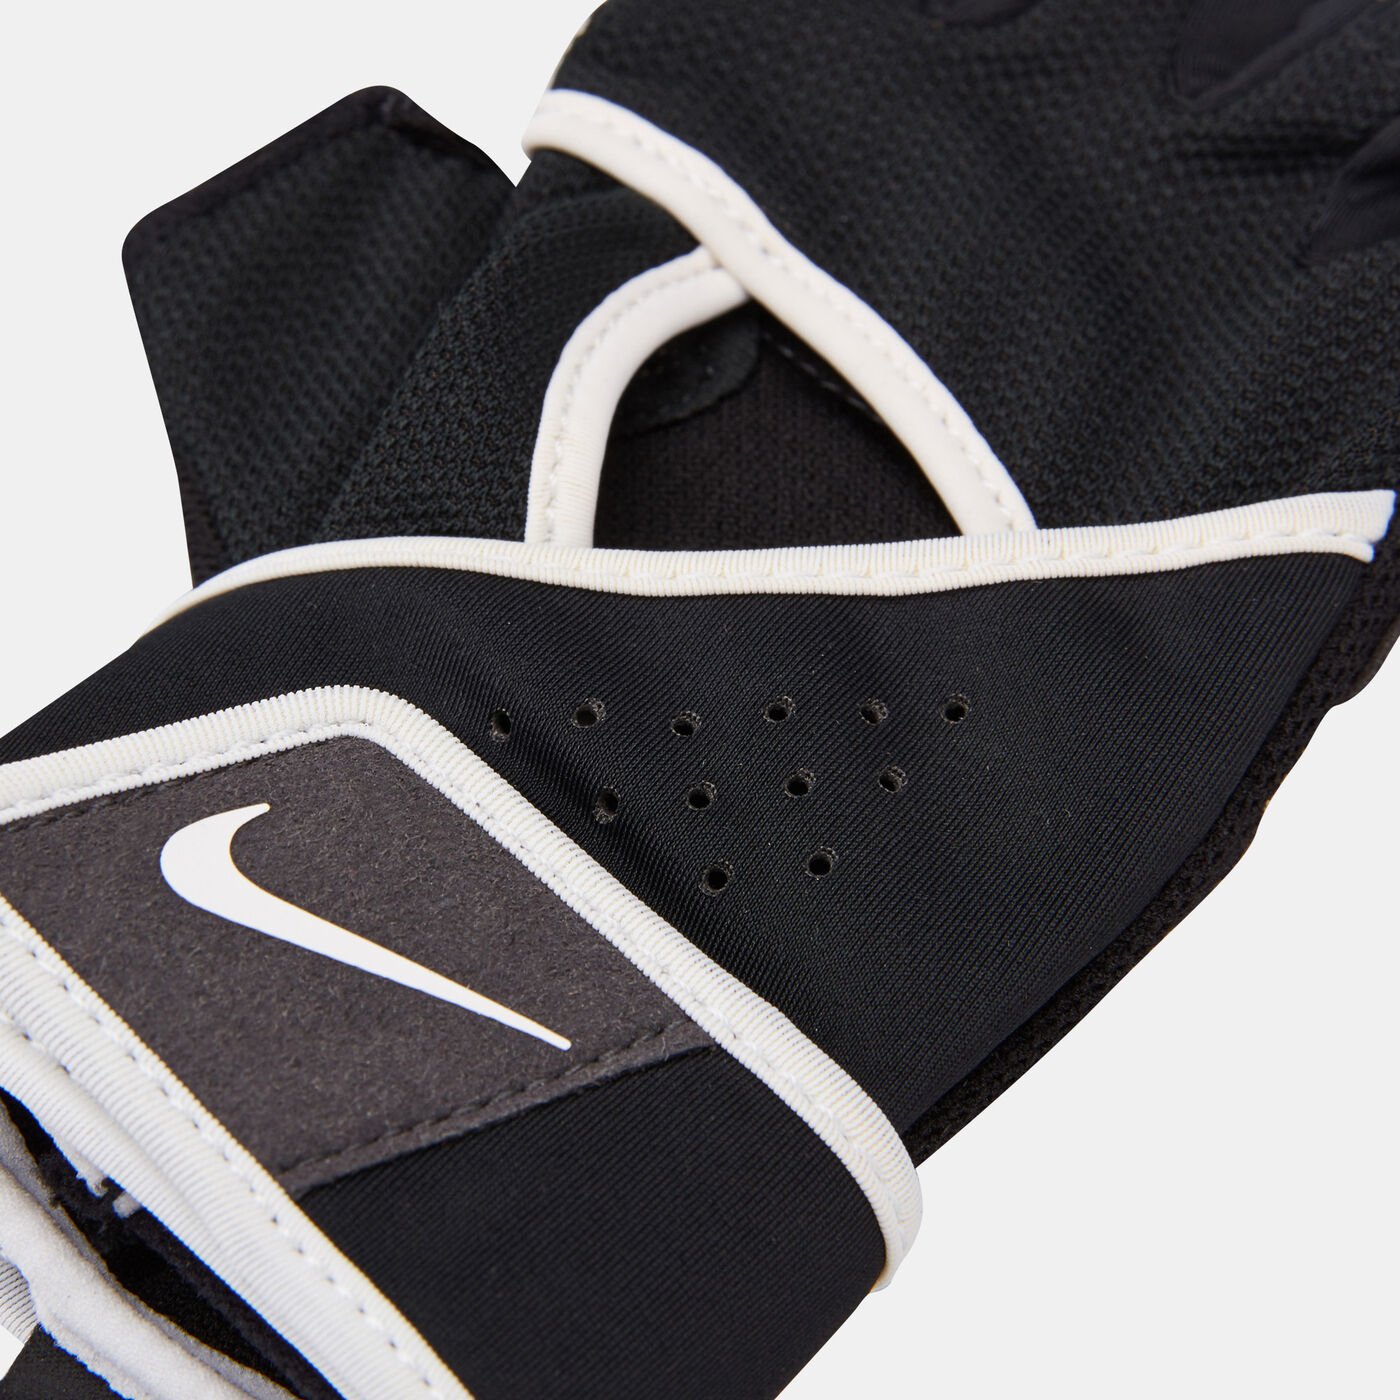 Women's Premium Fitness Gym Gloves - XS